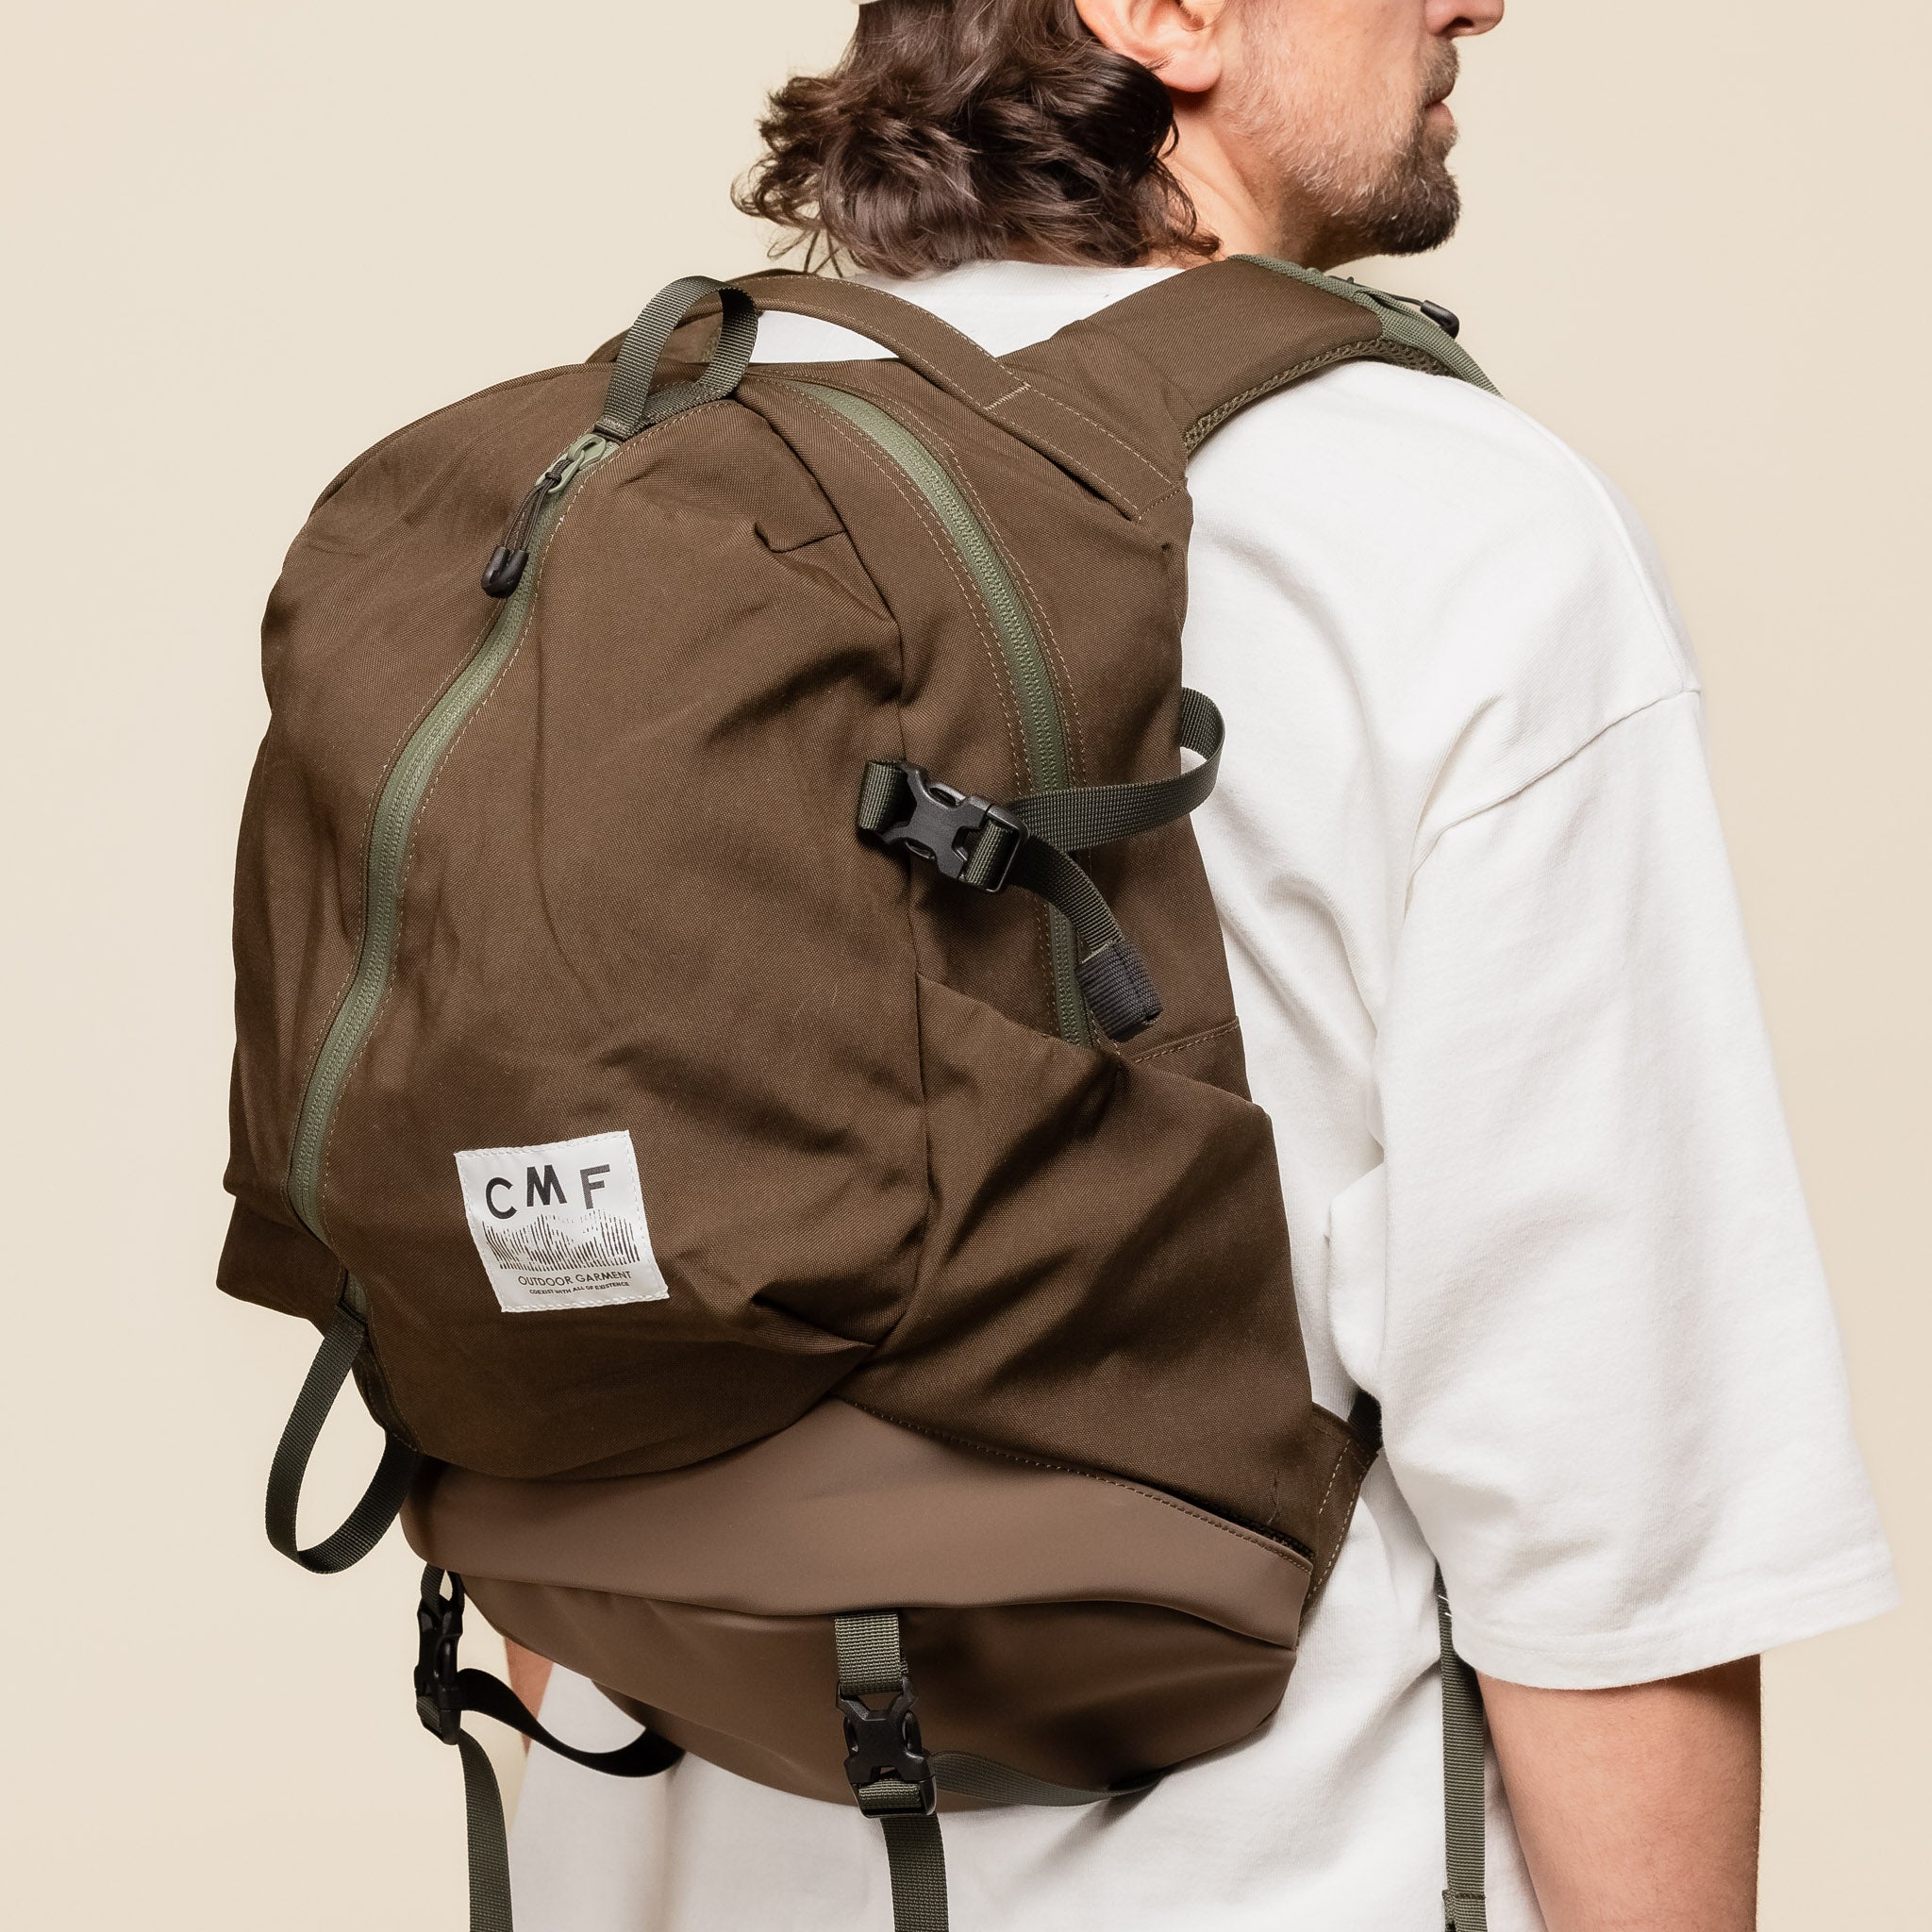 CMF Comfy Outdoor Garment - Weekenderz 20 Smooth Nylon Backpack - Khaki